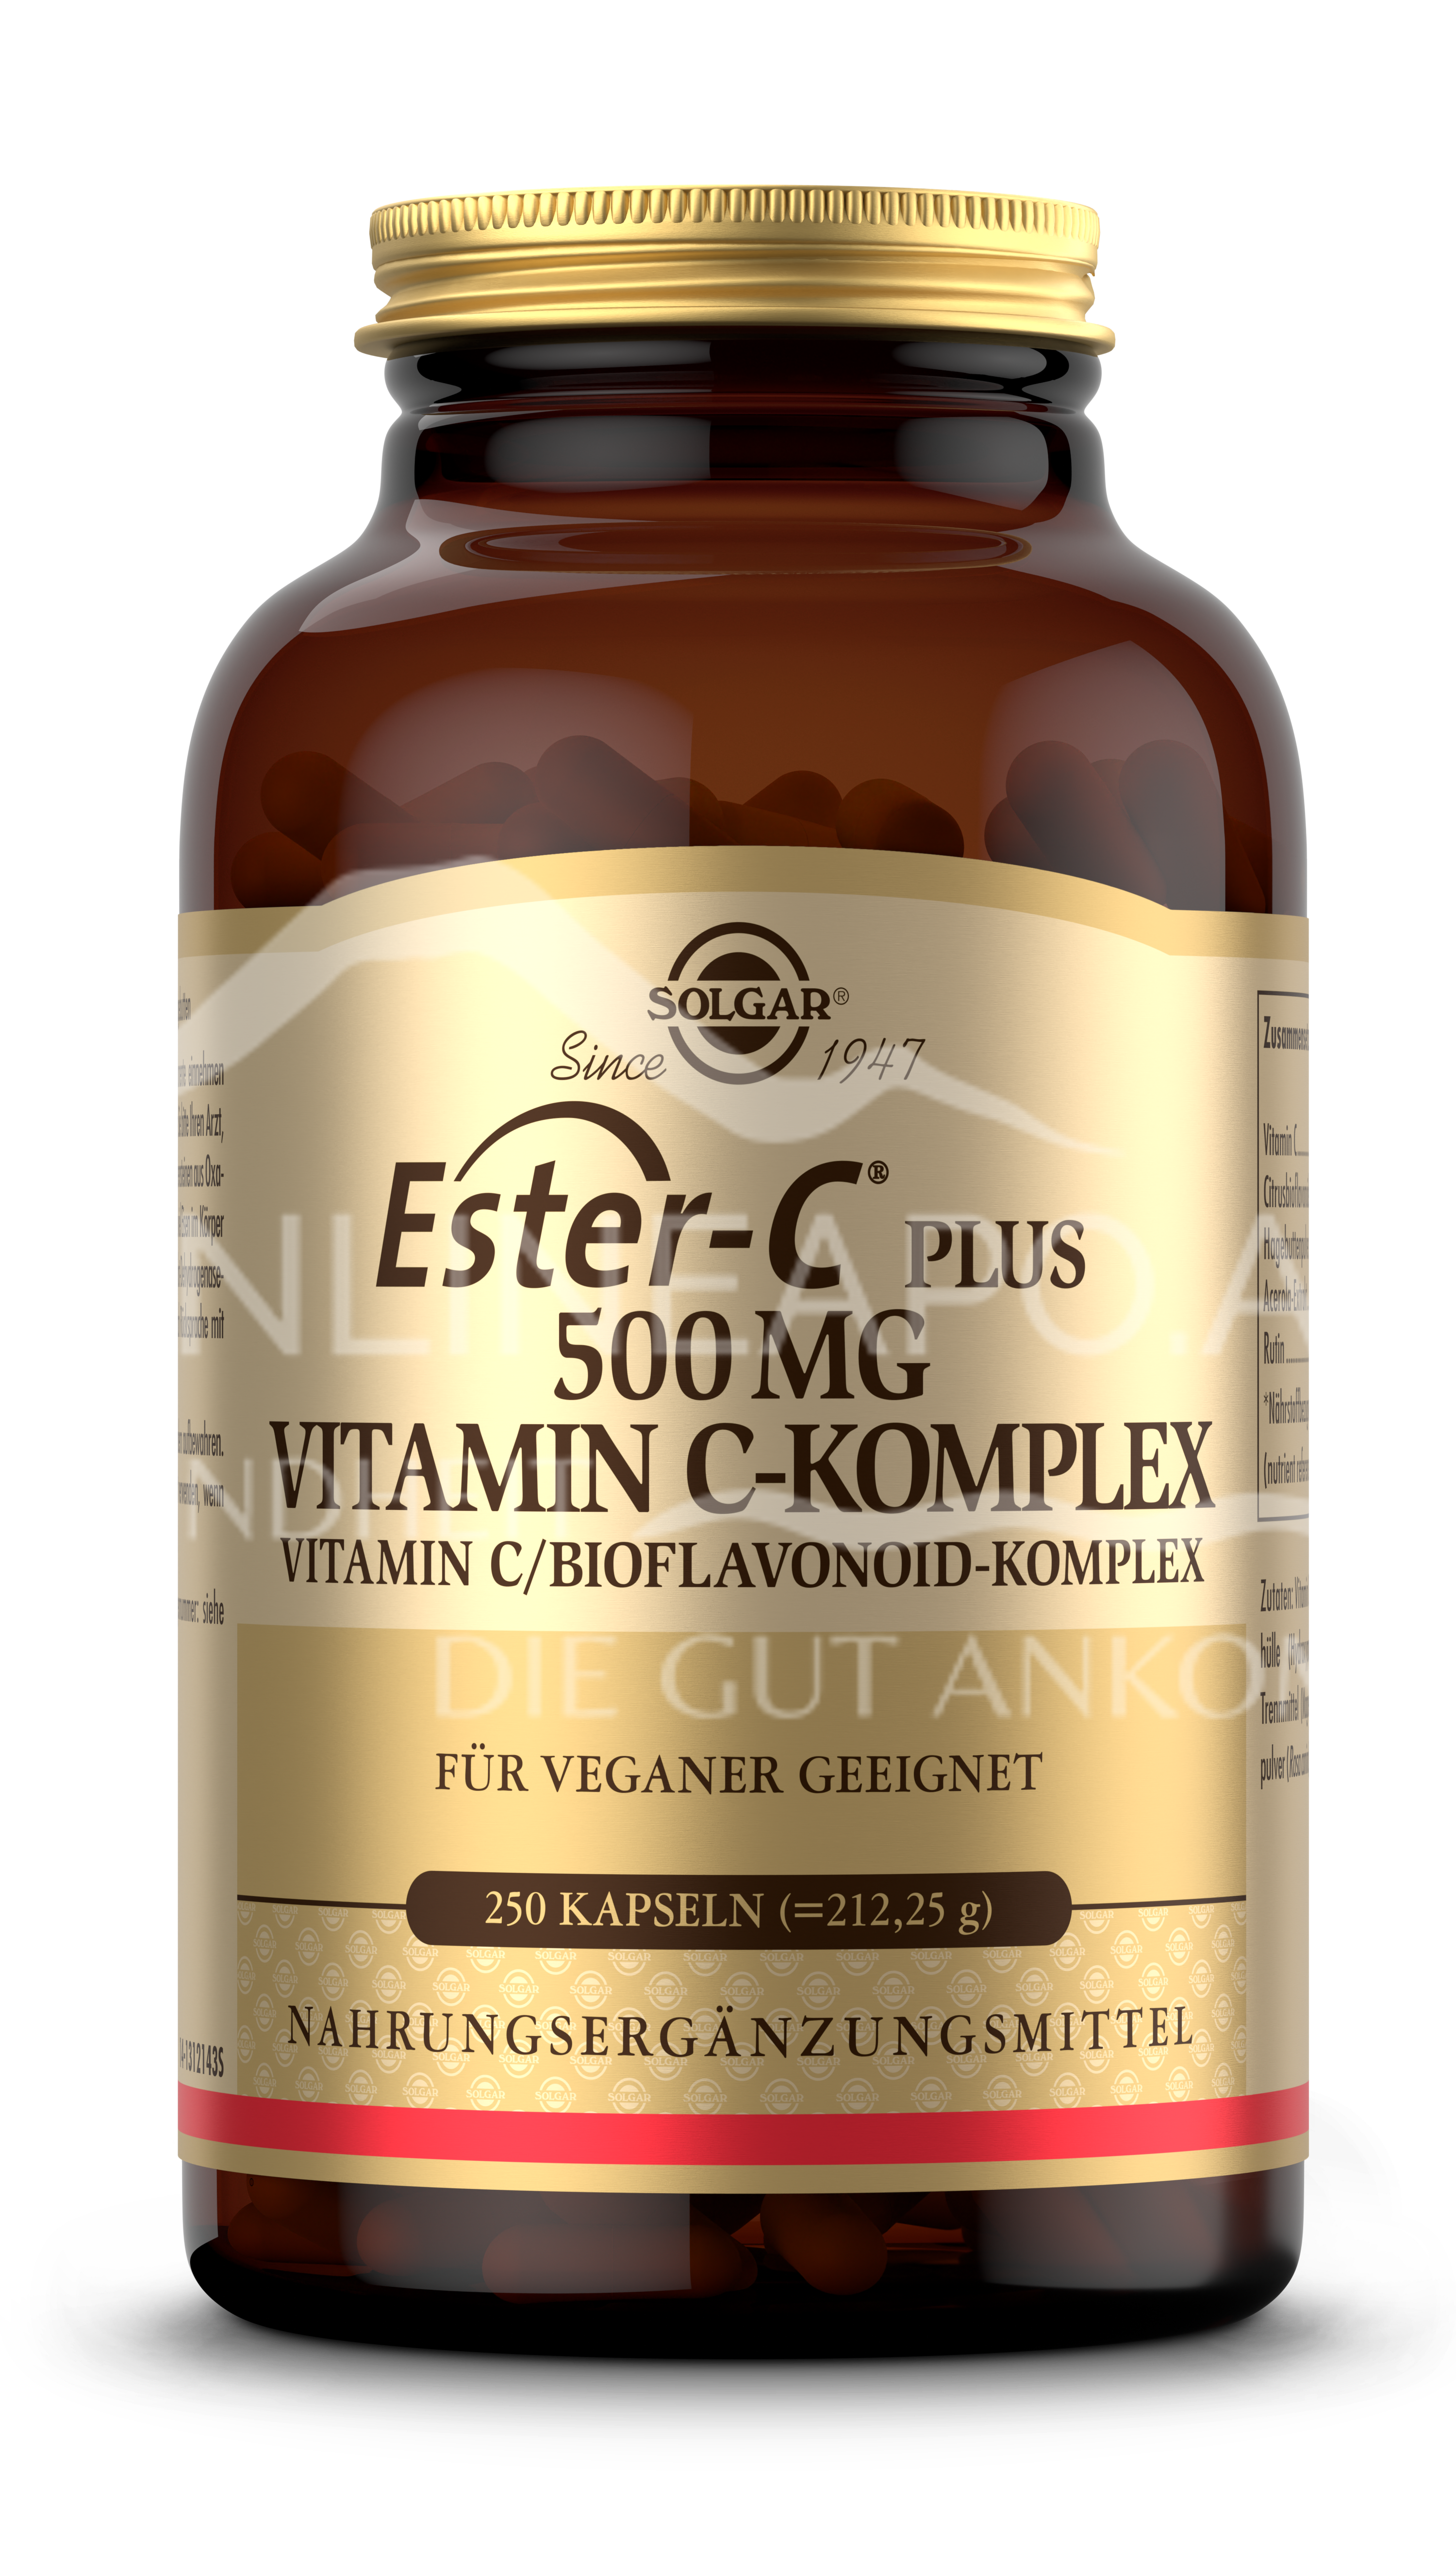 Solgar® Ester-C® Plus 500 mg Vitamin C-Komplex Kapseln